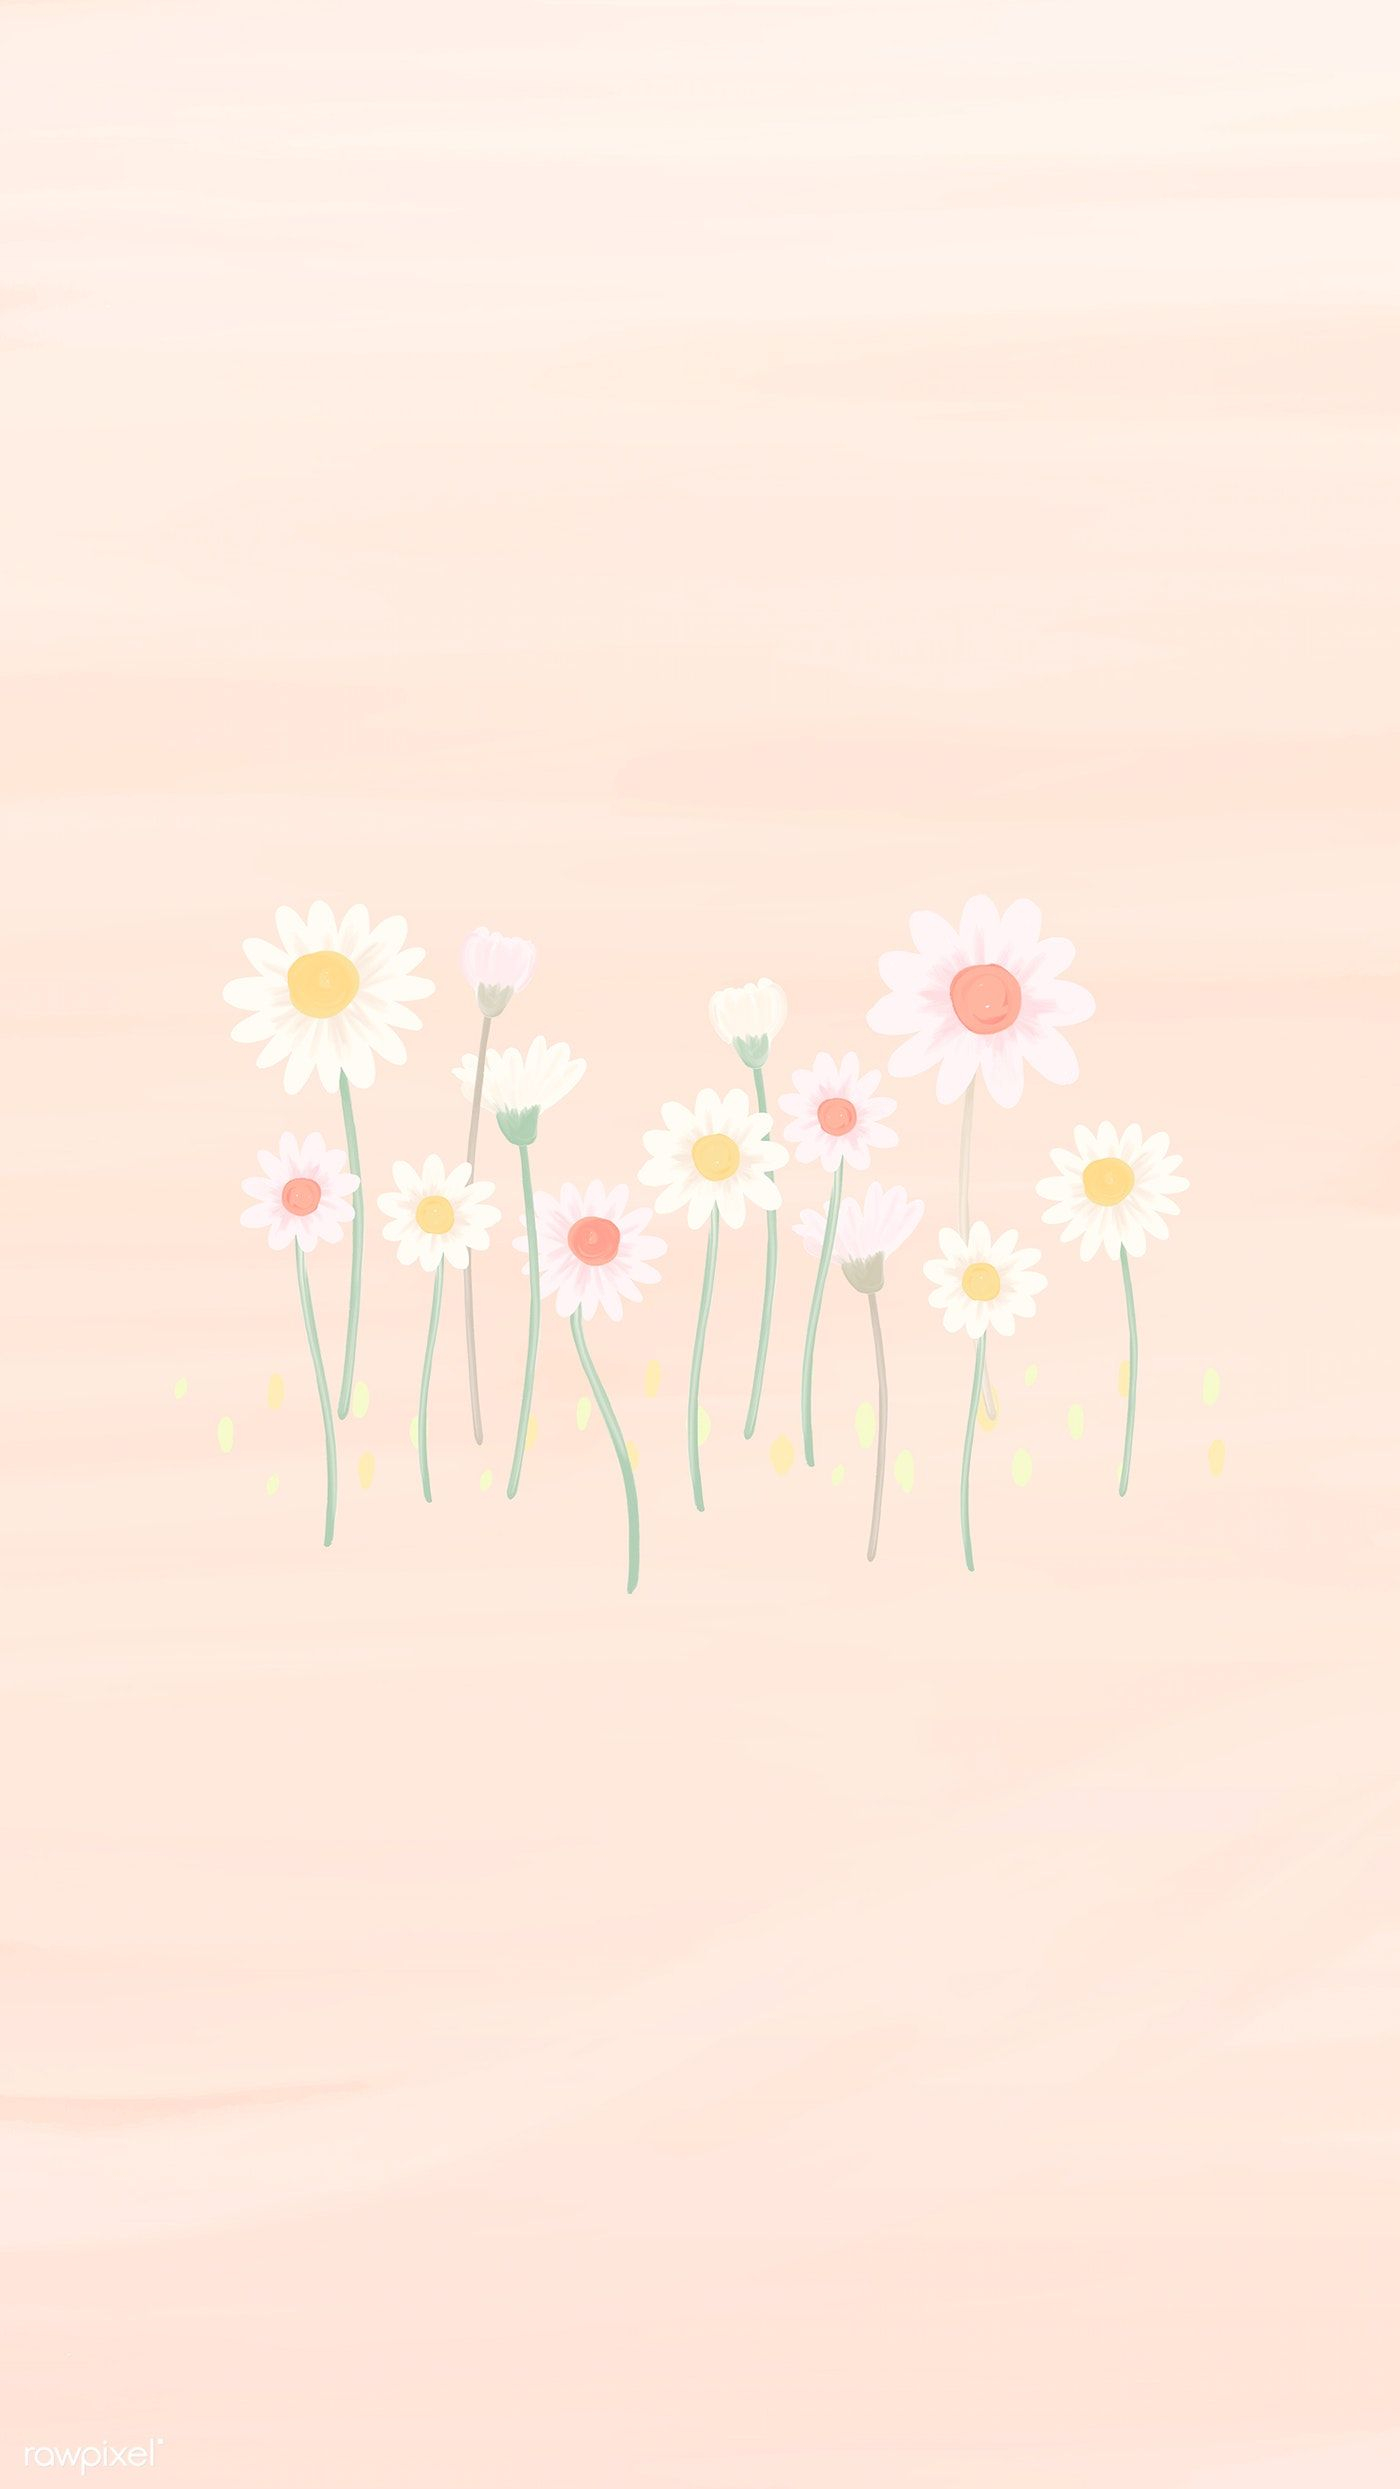 1400x2489 Hand drawn daisy mobile phone wallpaper vector | premium image by / manotang | Daisy wallpaper, Flower wallpaper, Wallpaper iphone cute